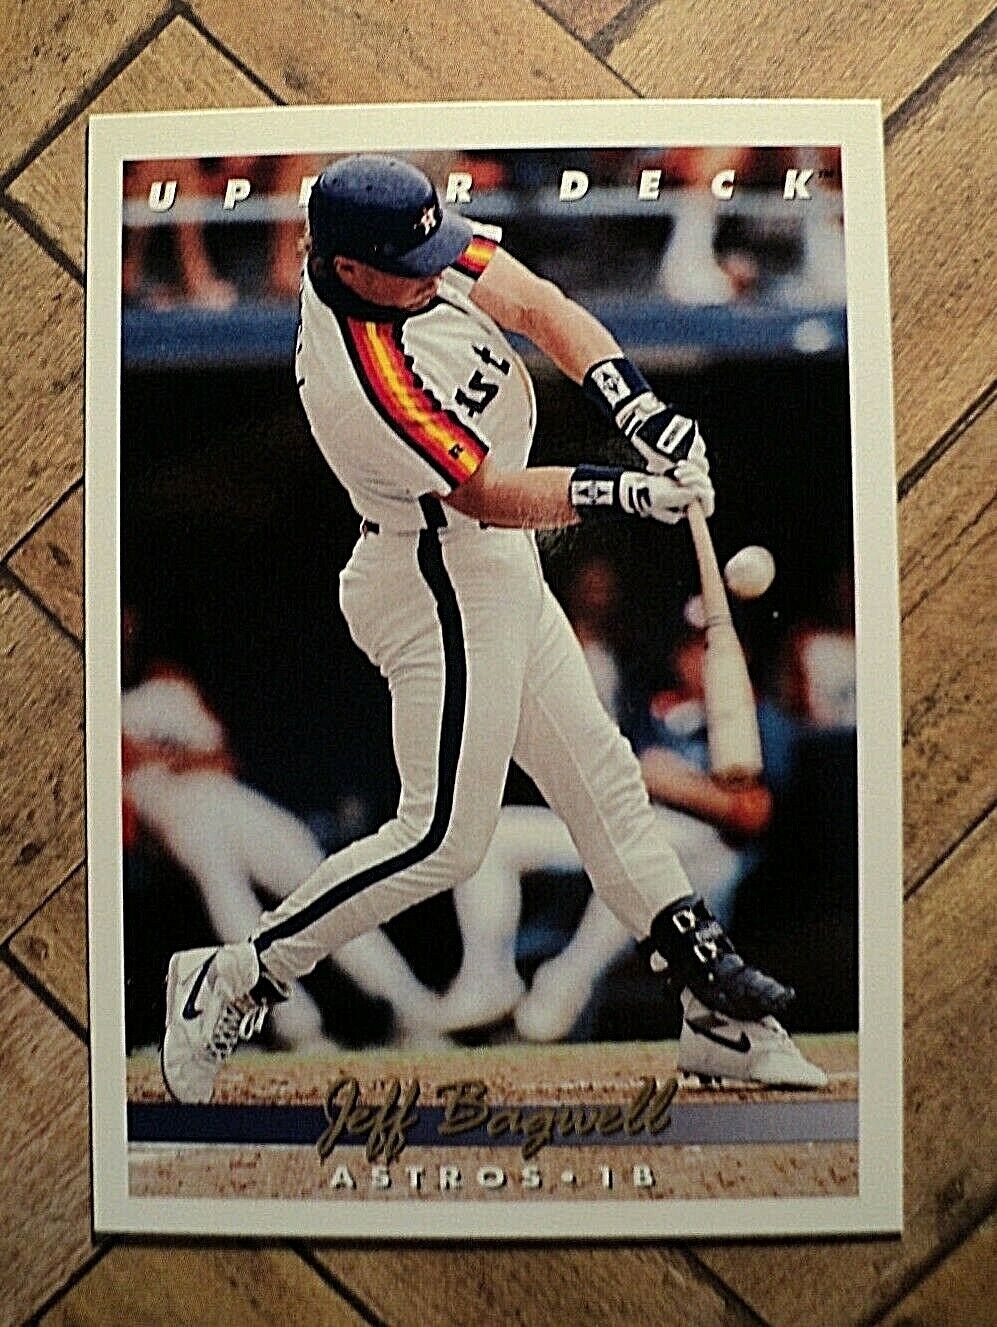 1993 Upper Deck Baseball Card #256 Jeff Bagwell EX AUCT#3392